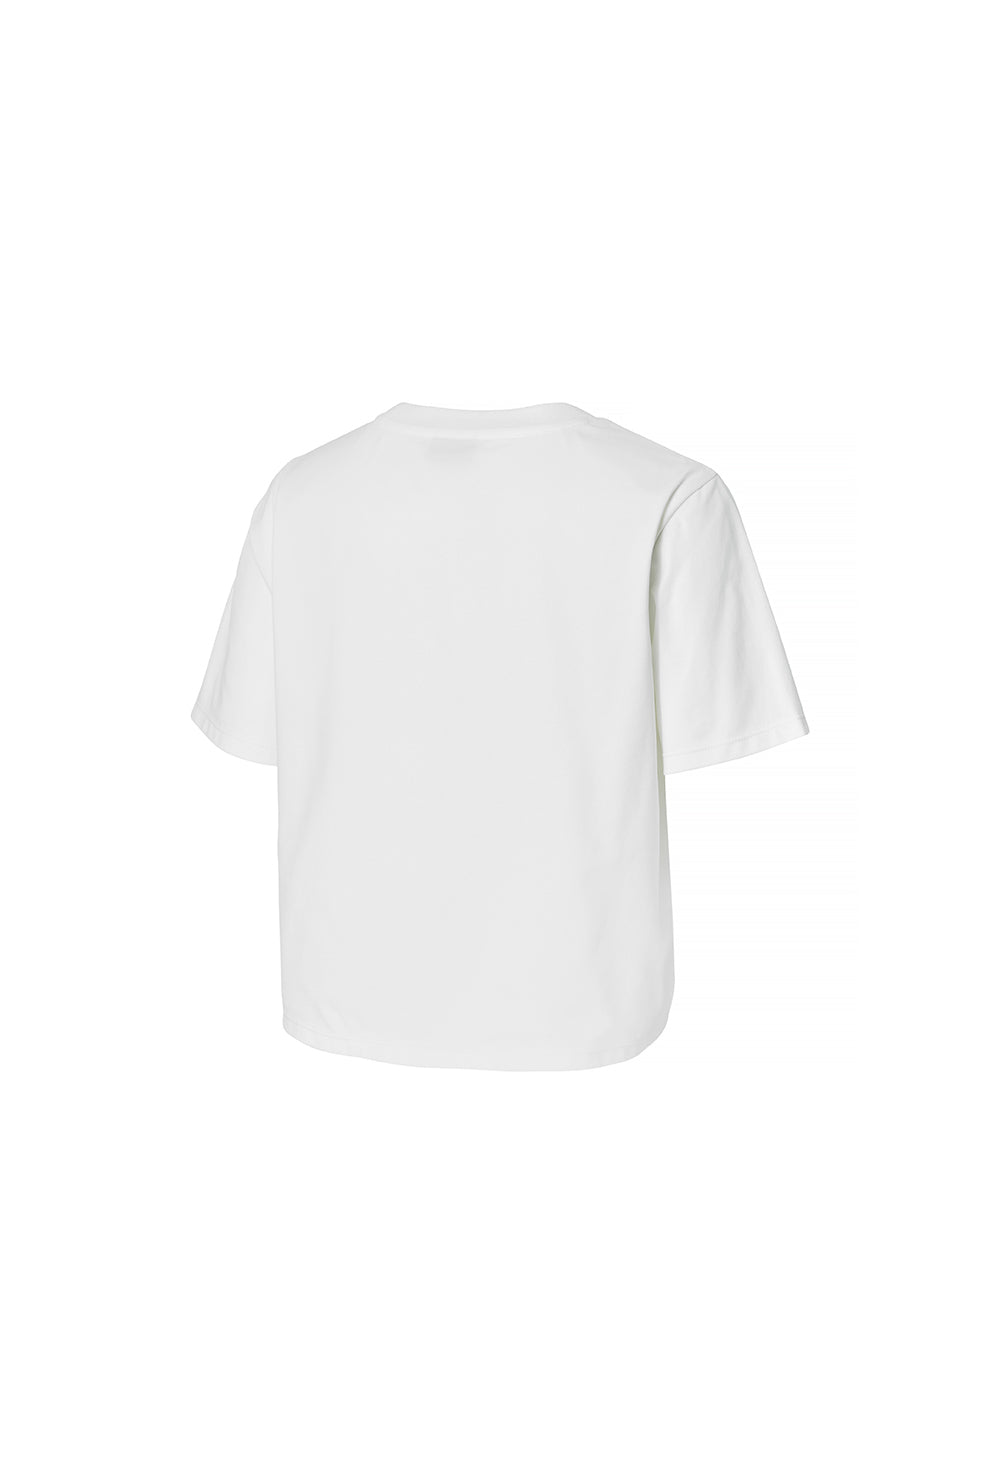 Basic Scratch Crop T-Shirt - Ivory